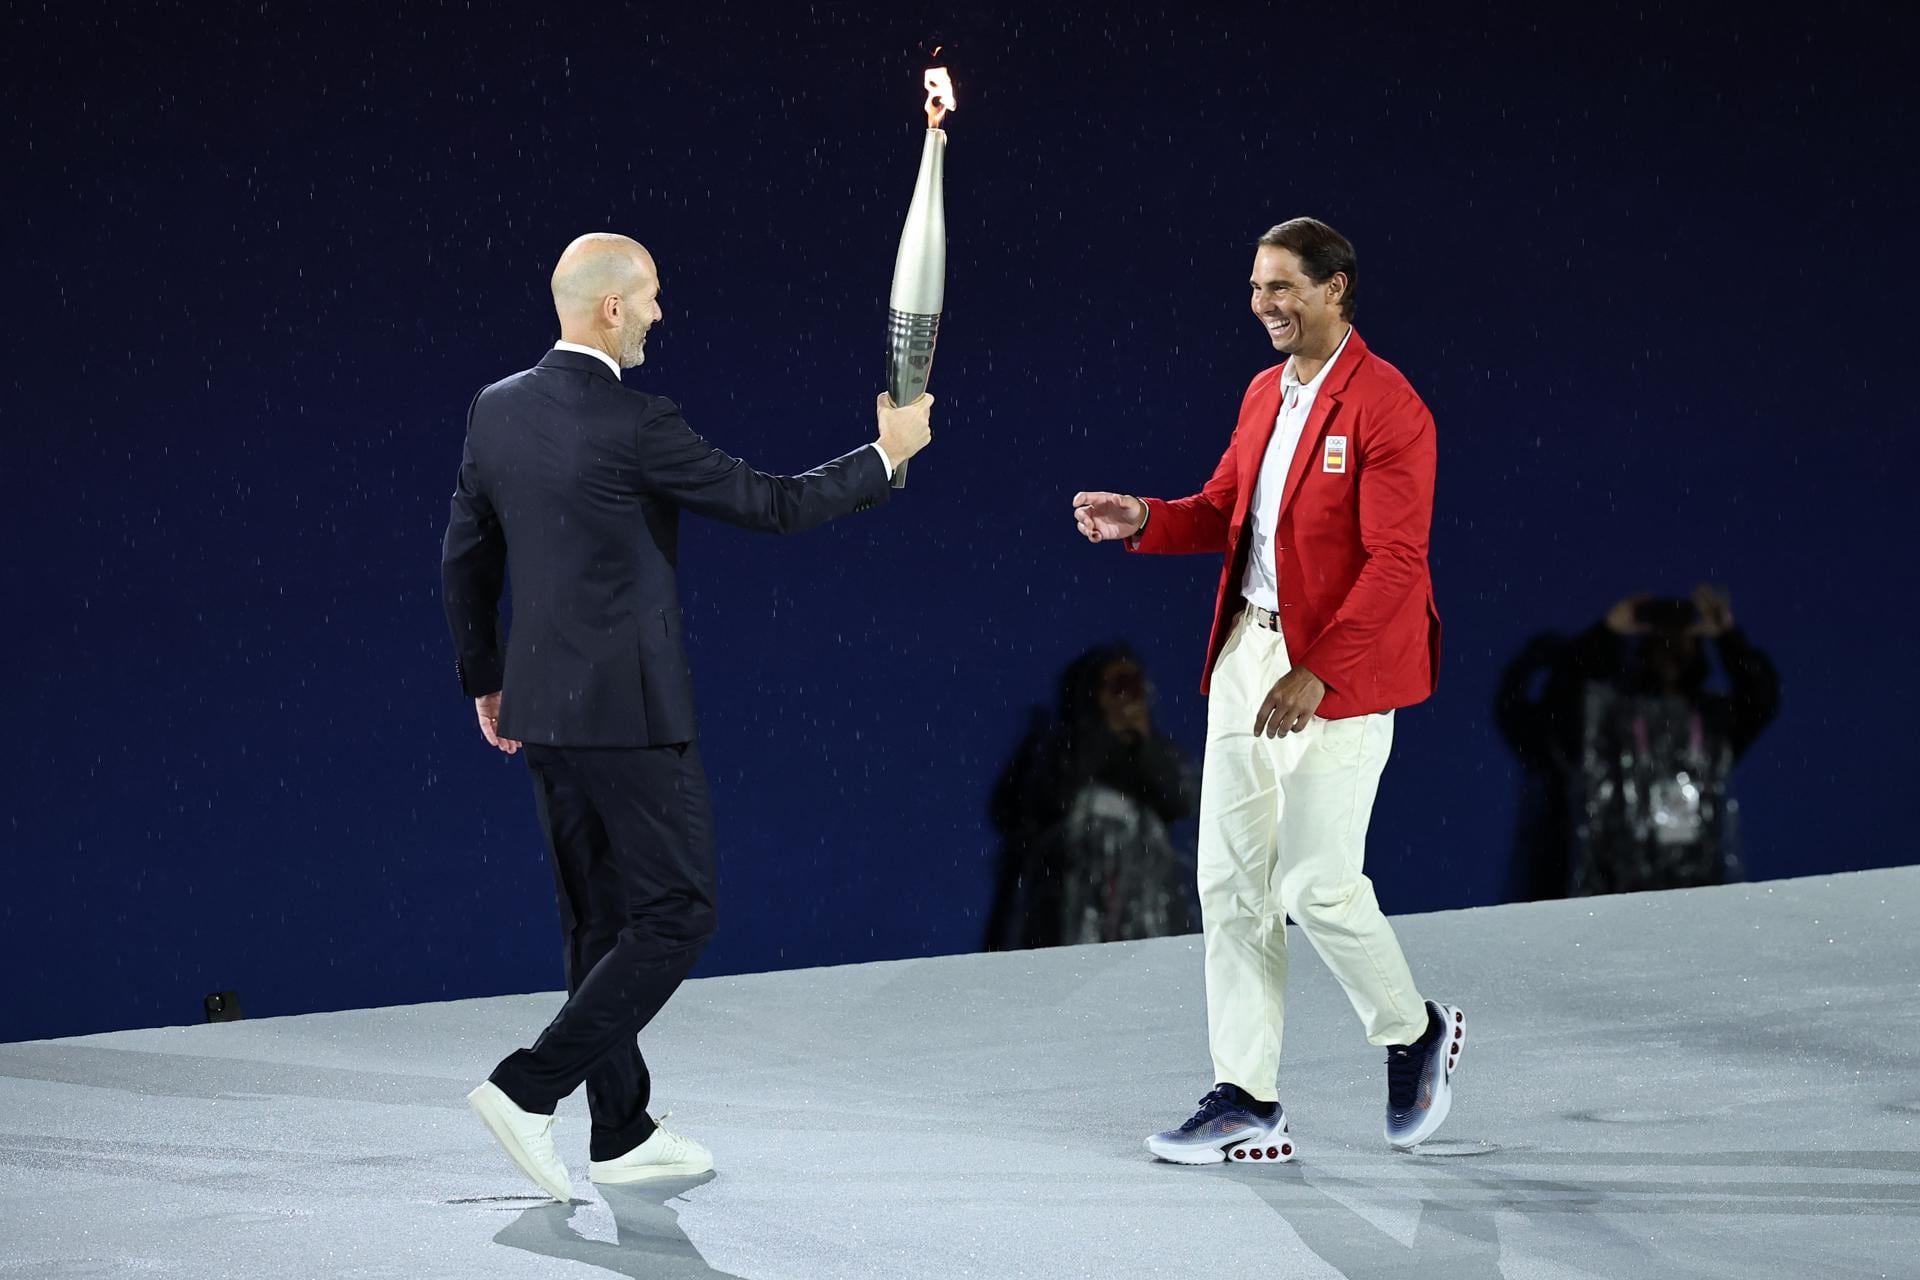 El exfutbolista francés Zinedine Zidane le pasa la llama olímpica al tenista español Rafael Nadal. EFE